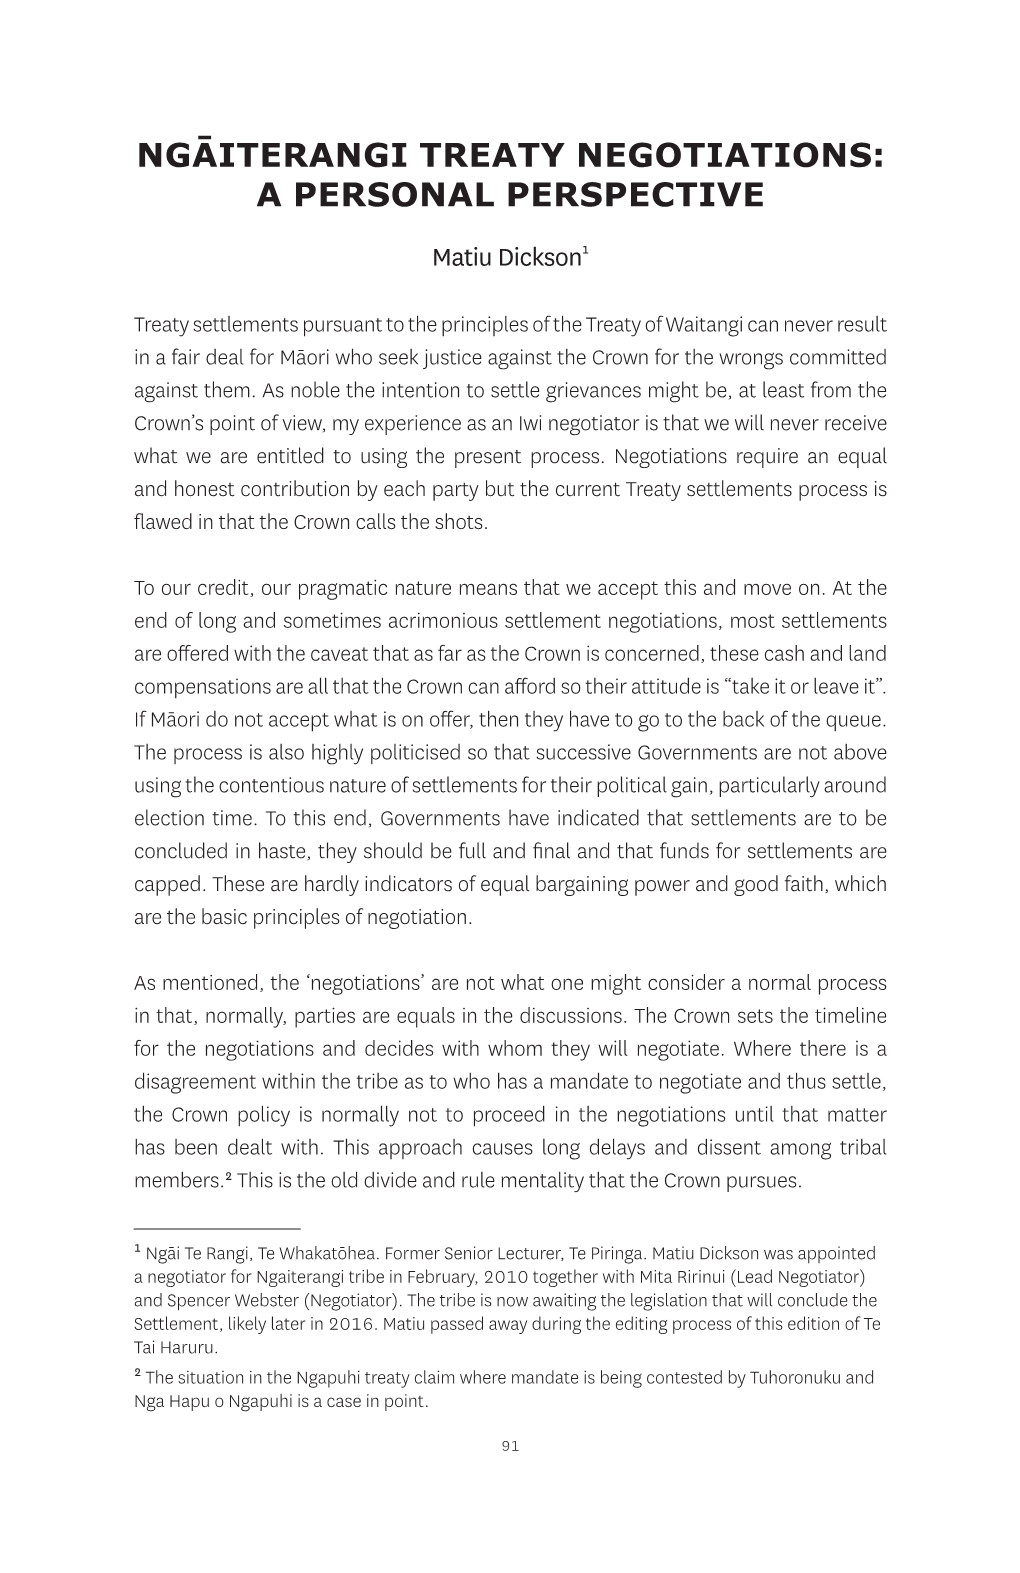 Ngāiterangi Treaty Negotiations: a Personal Perspective